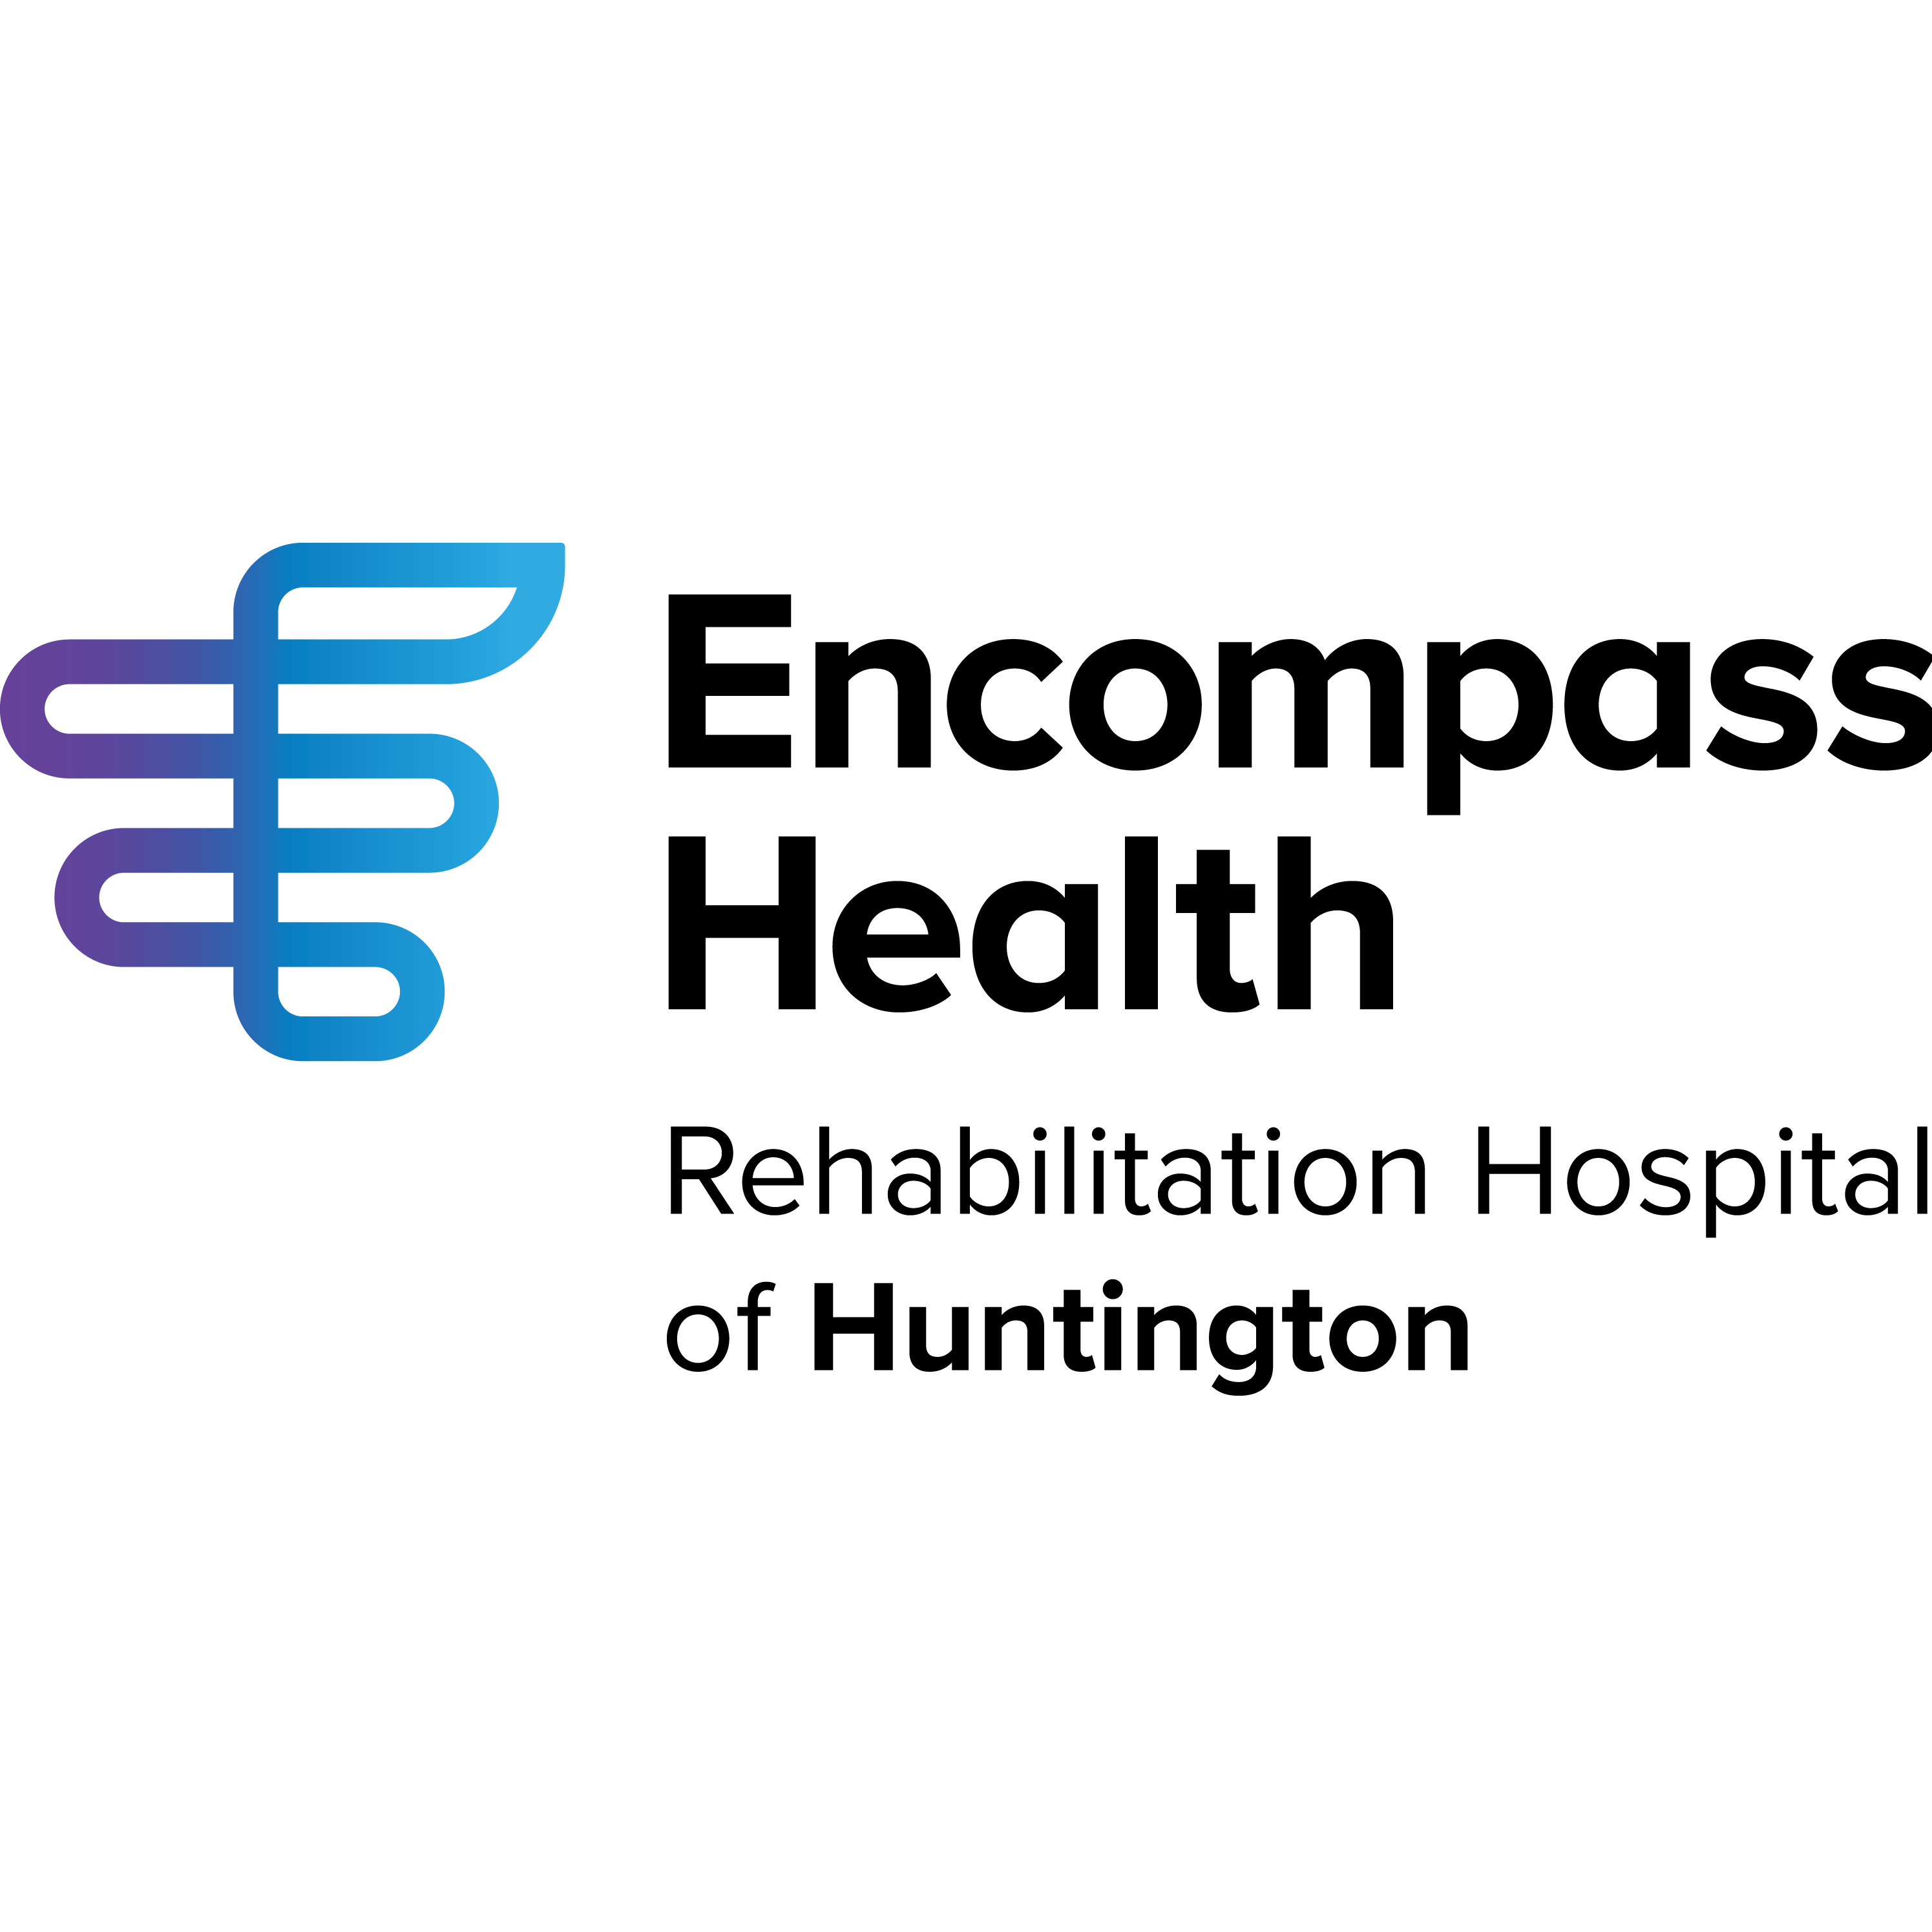 Encompass Health Rehabilitation Hospital of Huntington